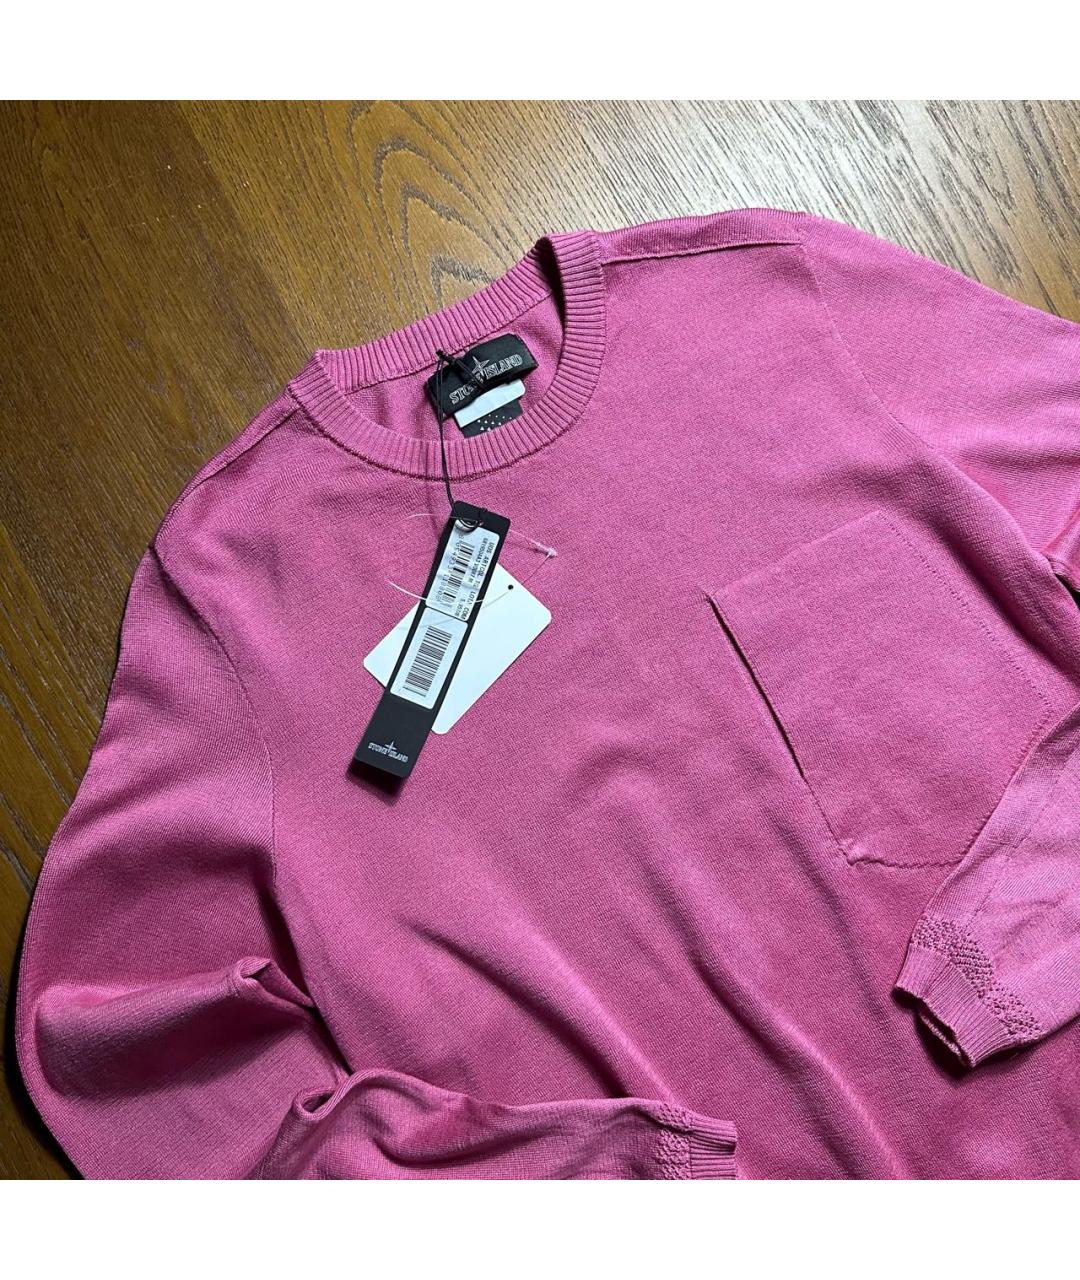 STONE ISLAND SHADOW PROJECT Розовый хлопковый джемпер / свитер, фото 3